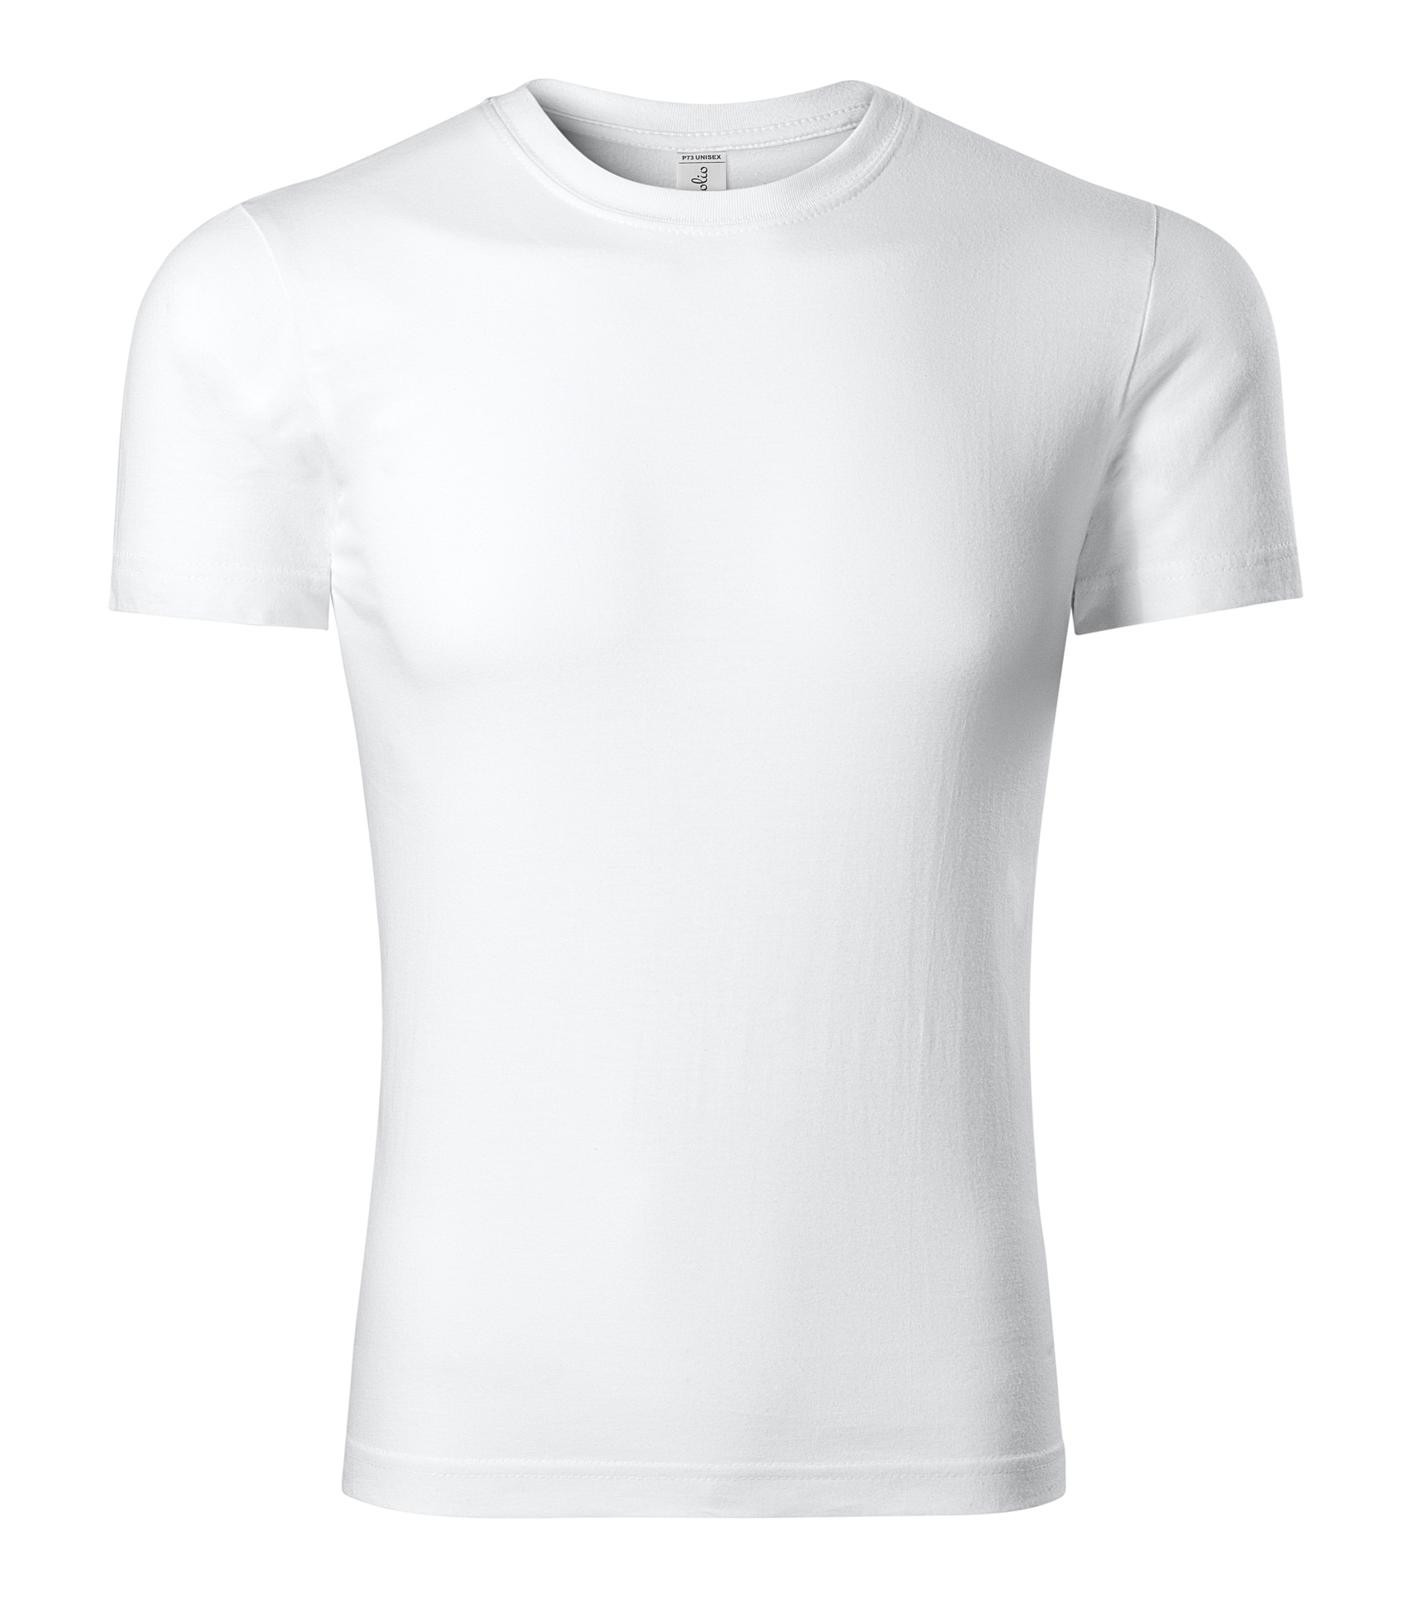 Unisex tričko Piccolio Paint P73 - veľkosť: XS, farba: biela